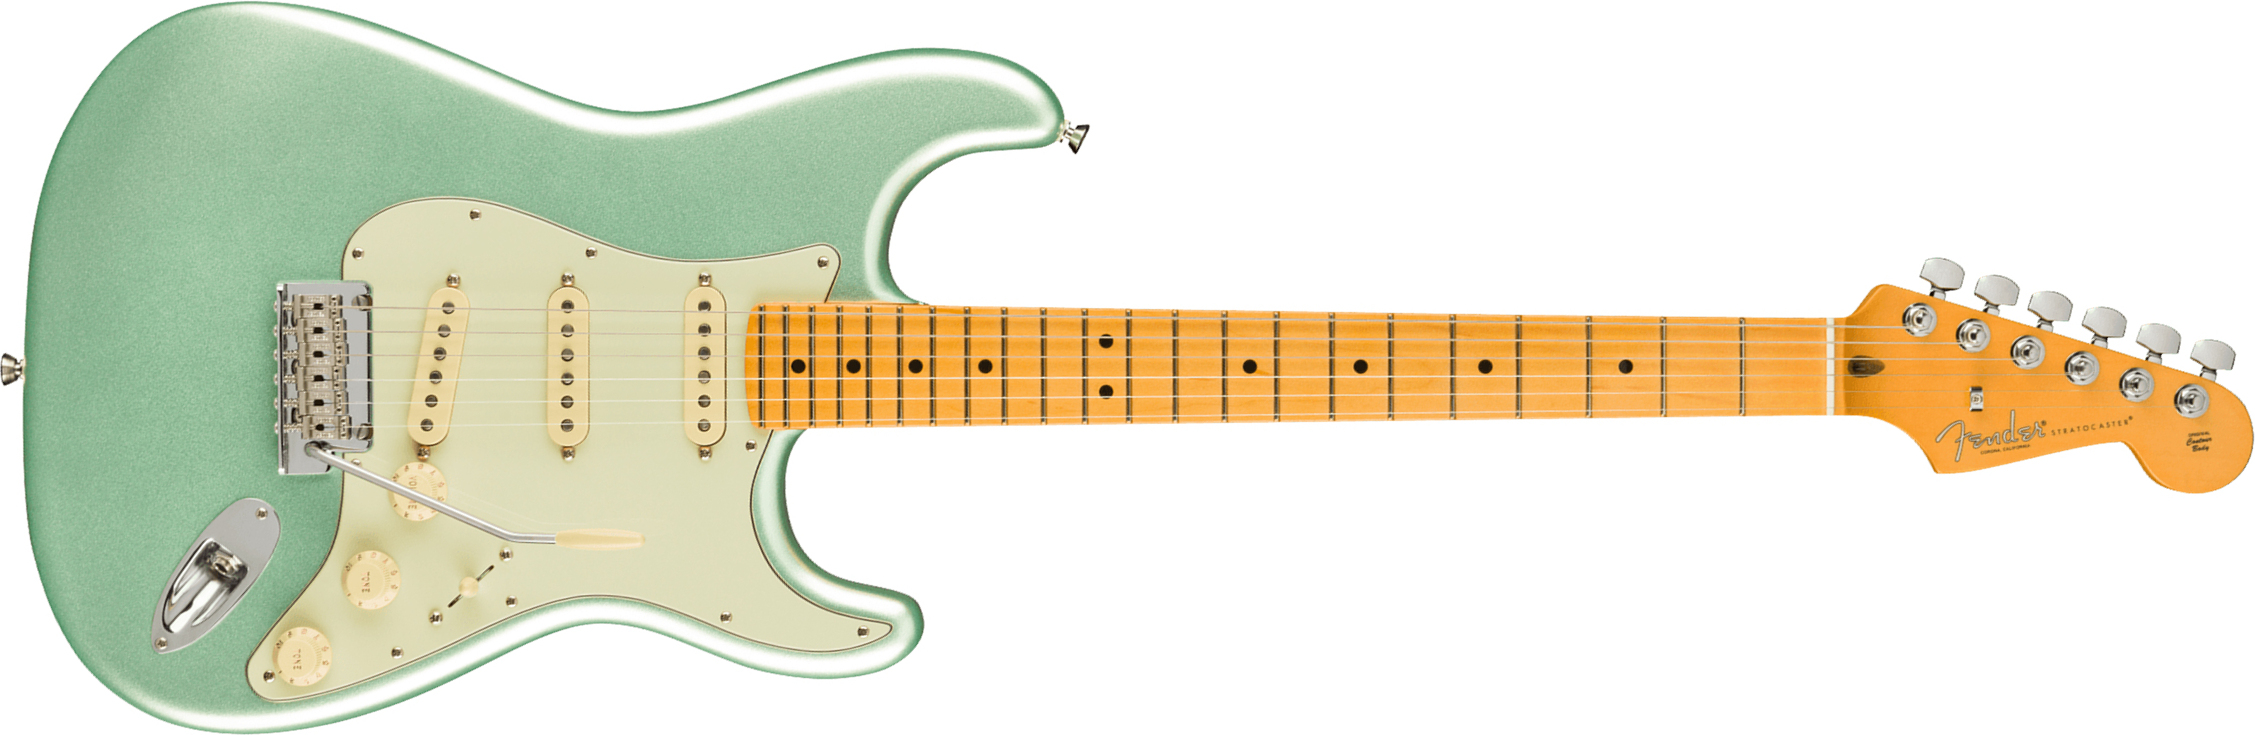 Fender Strat American Professional Ii Usa Mn - Mystic Surf Green - E-Gitarre in Str-Form - Main picture